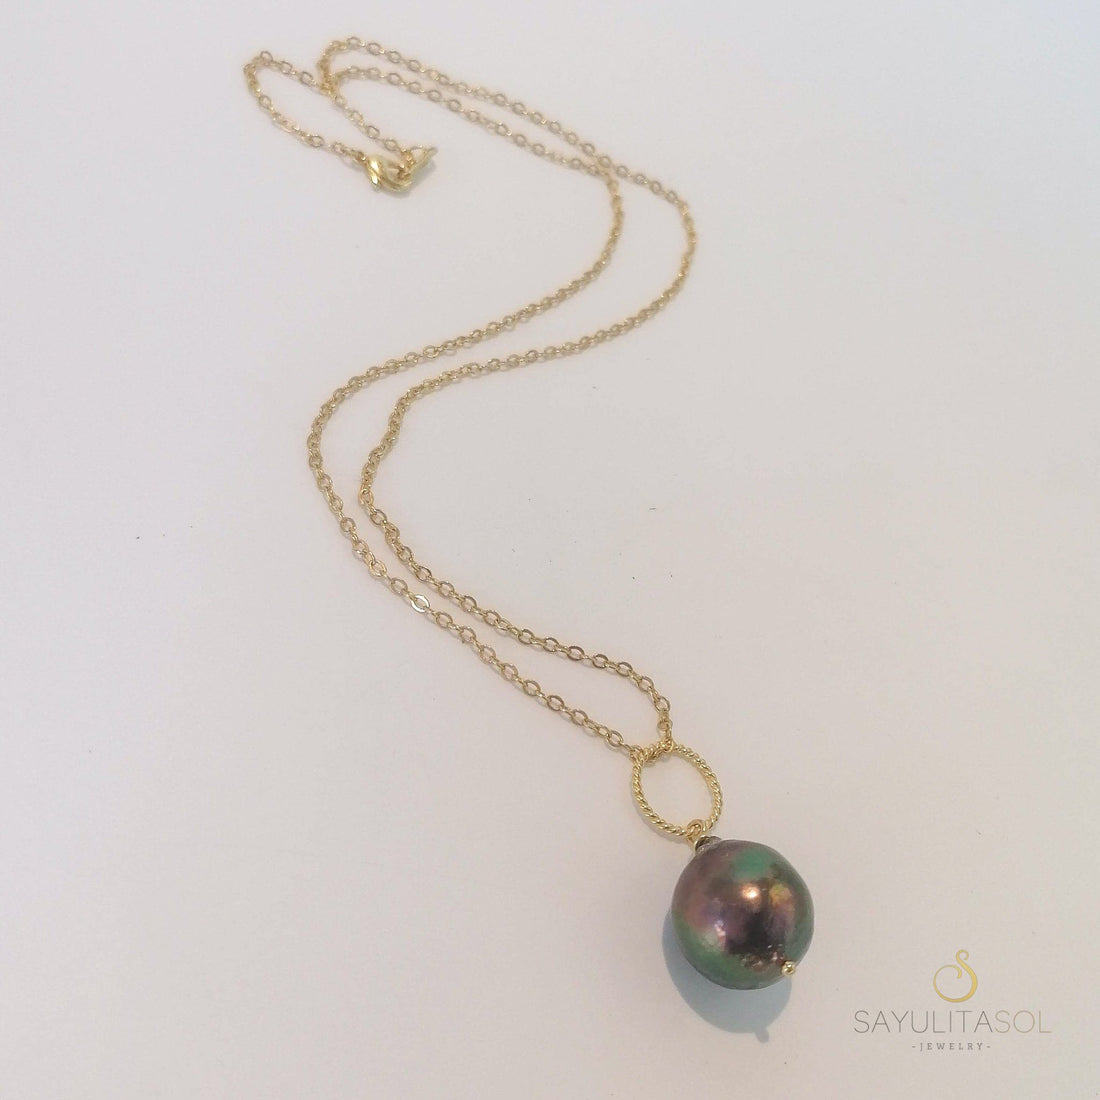 Piedras Twist Pendant with Black Pearl in Gold Necklaces Sayulita Sol 